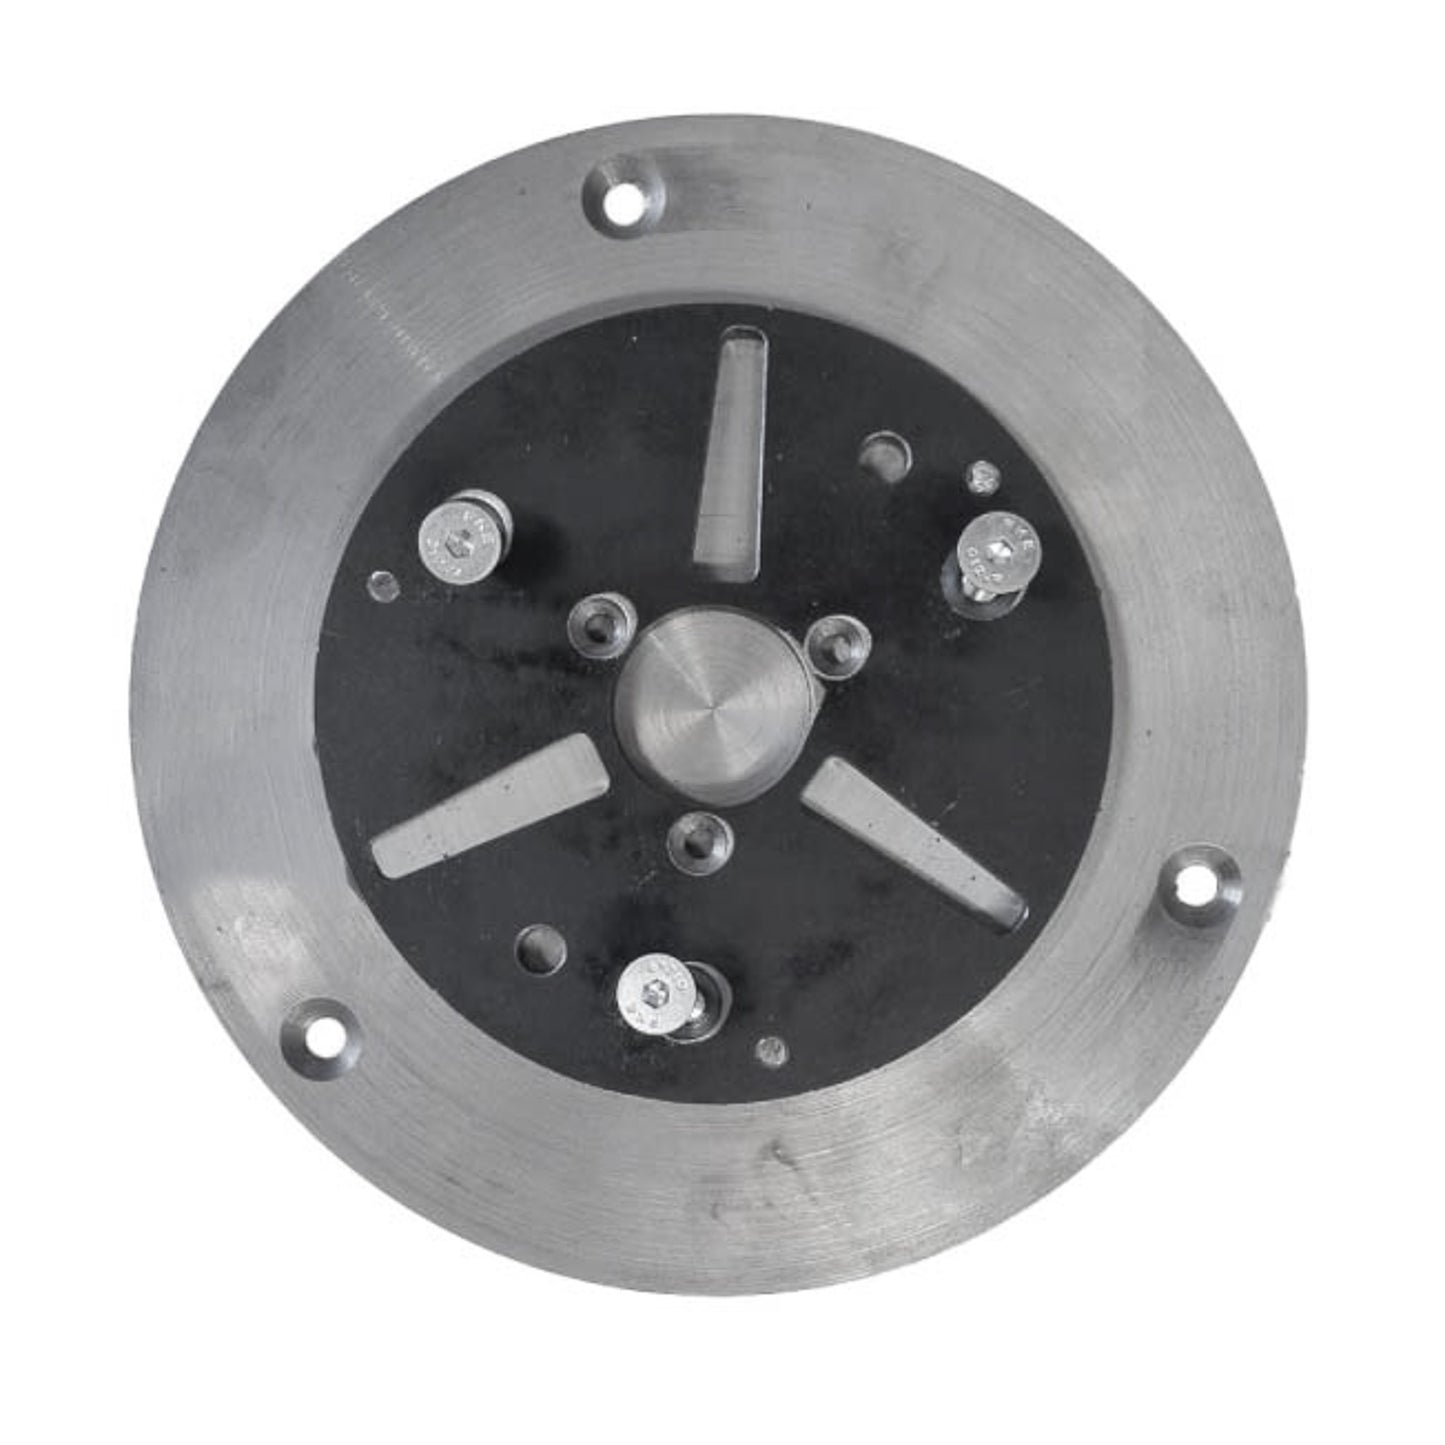 Line Marking Removal Adaptor Plate Kit for DSM250 - 160mm grinding width